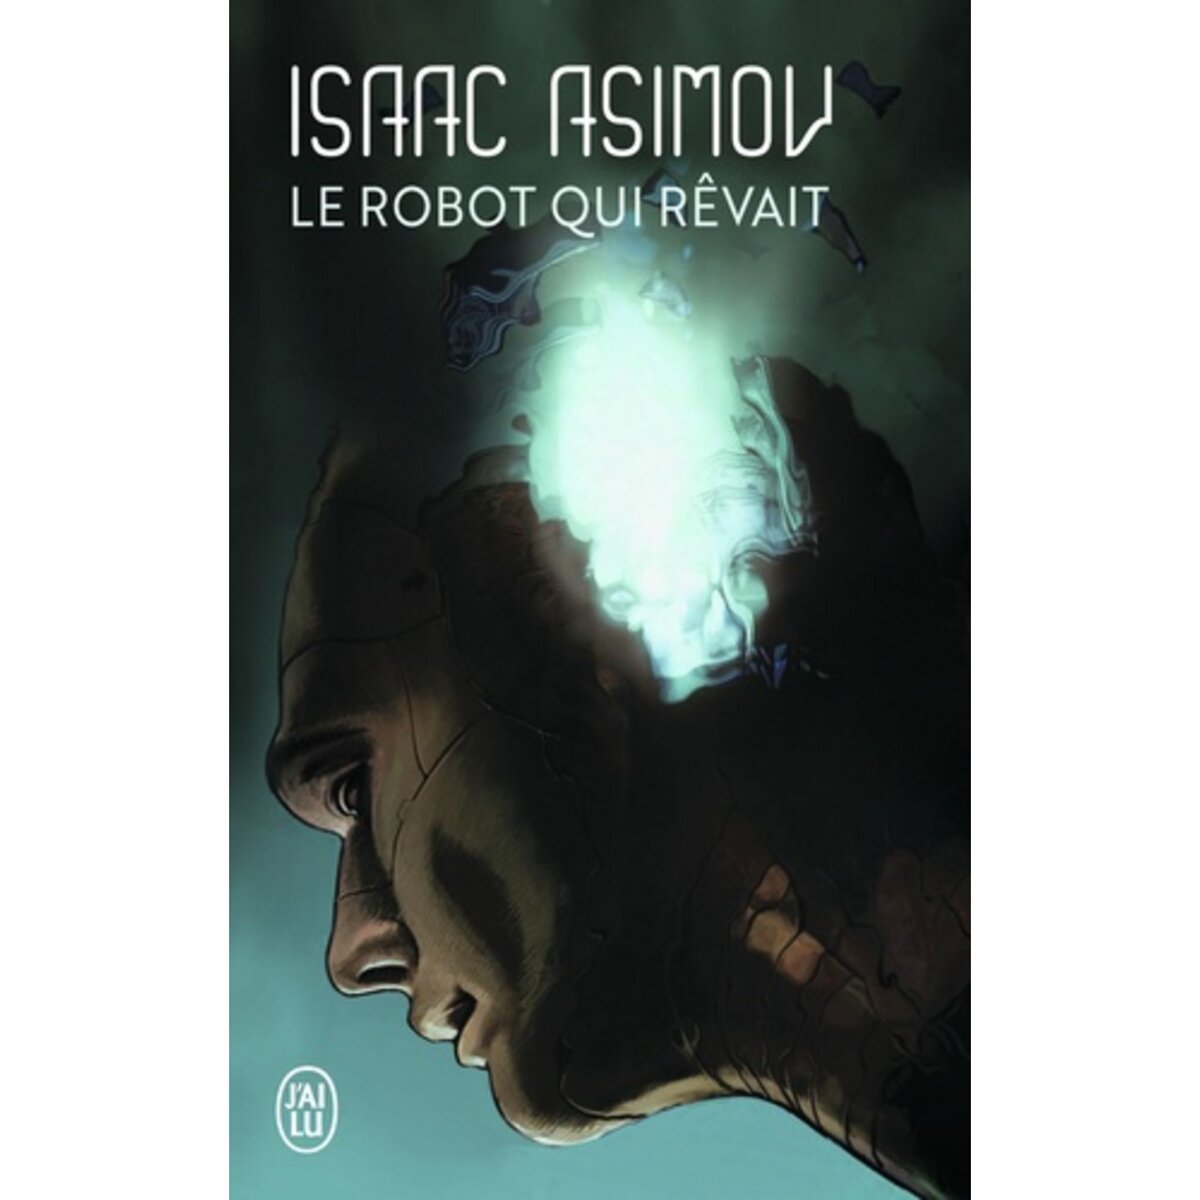  LE ROBOT QUI REVAIT, Asimov Isaac